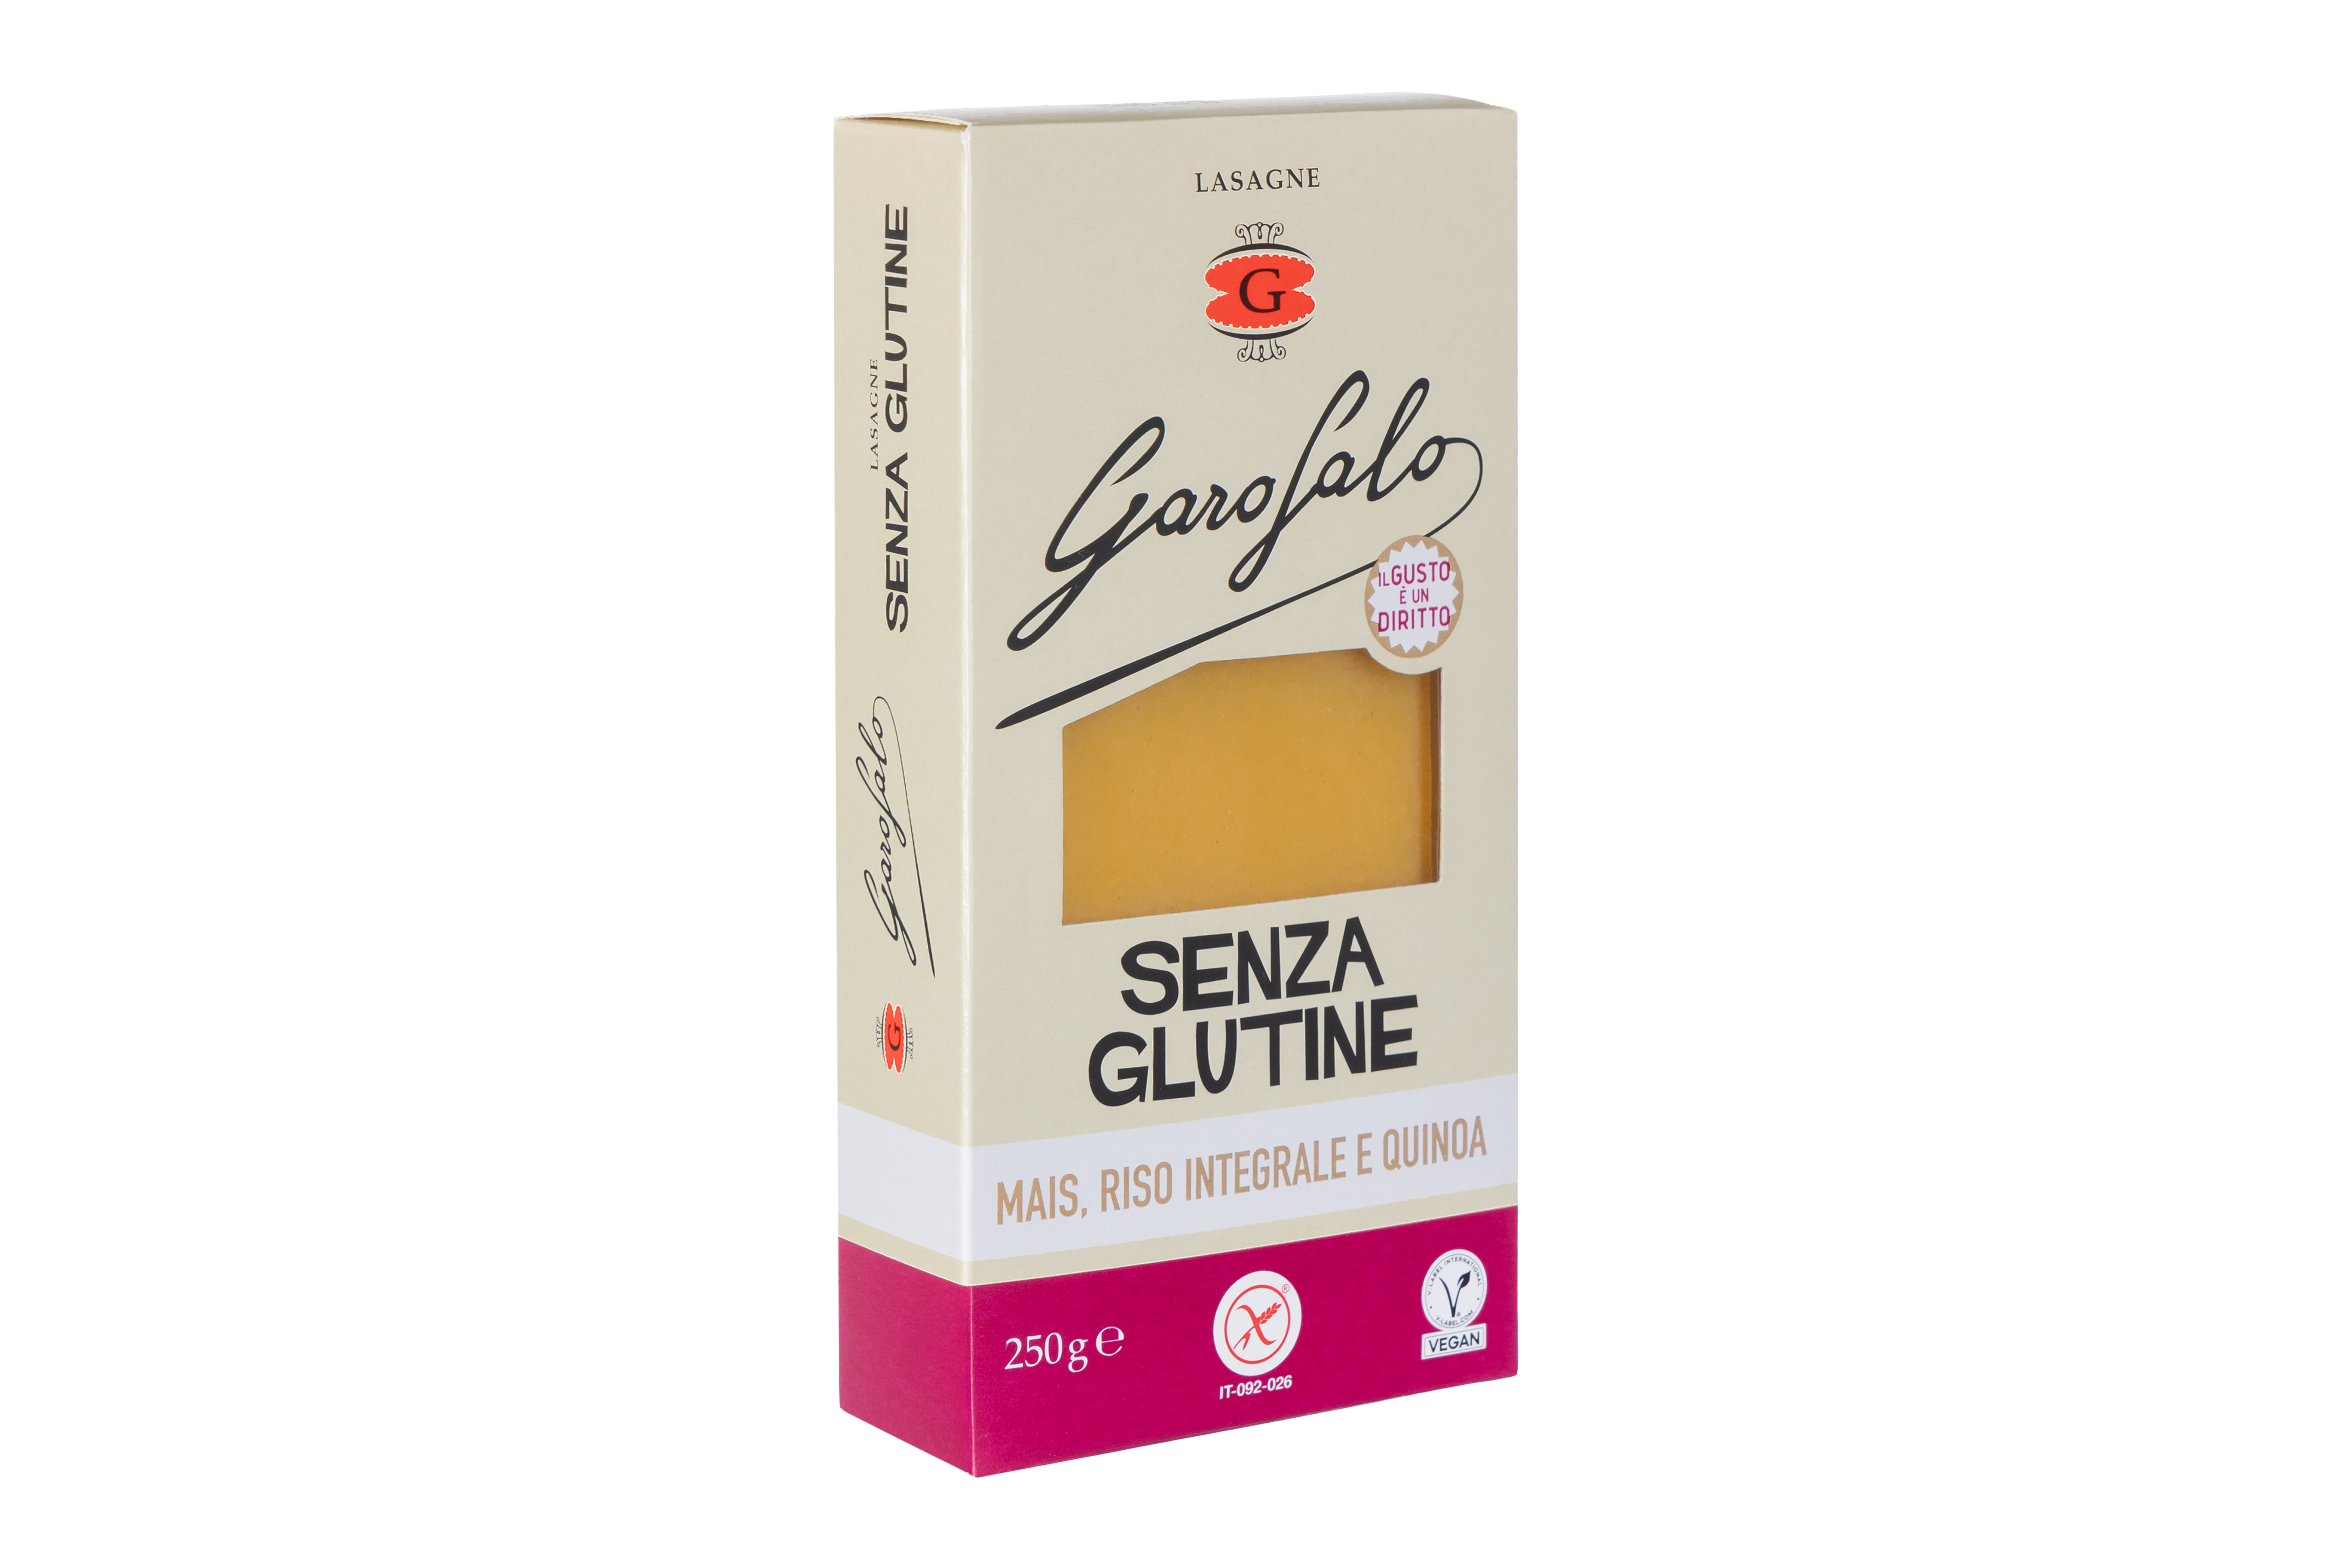 Pasta Garofalo - Lasagne Senza Glutine